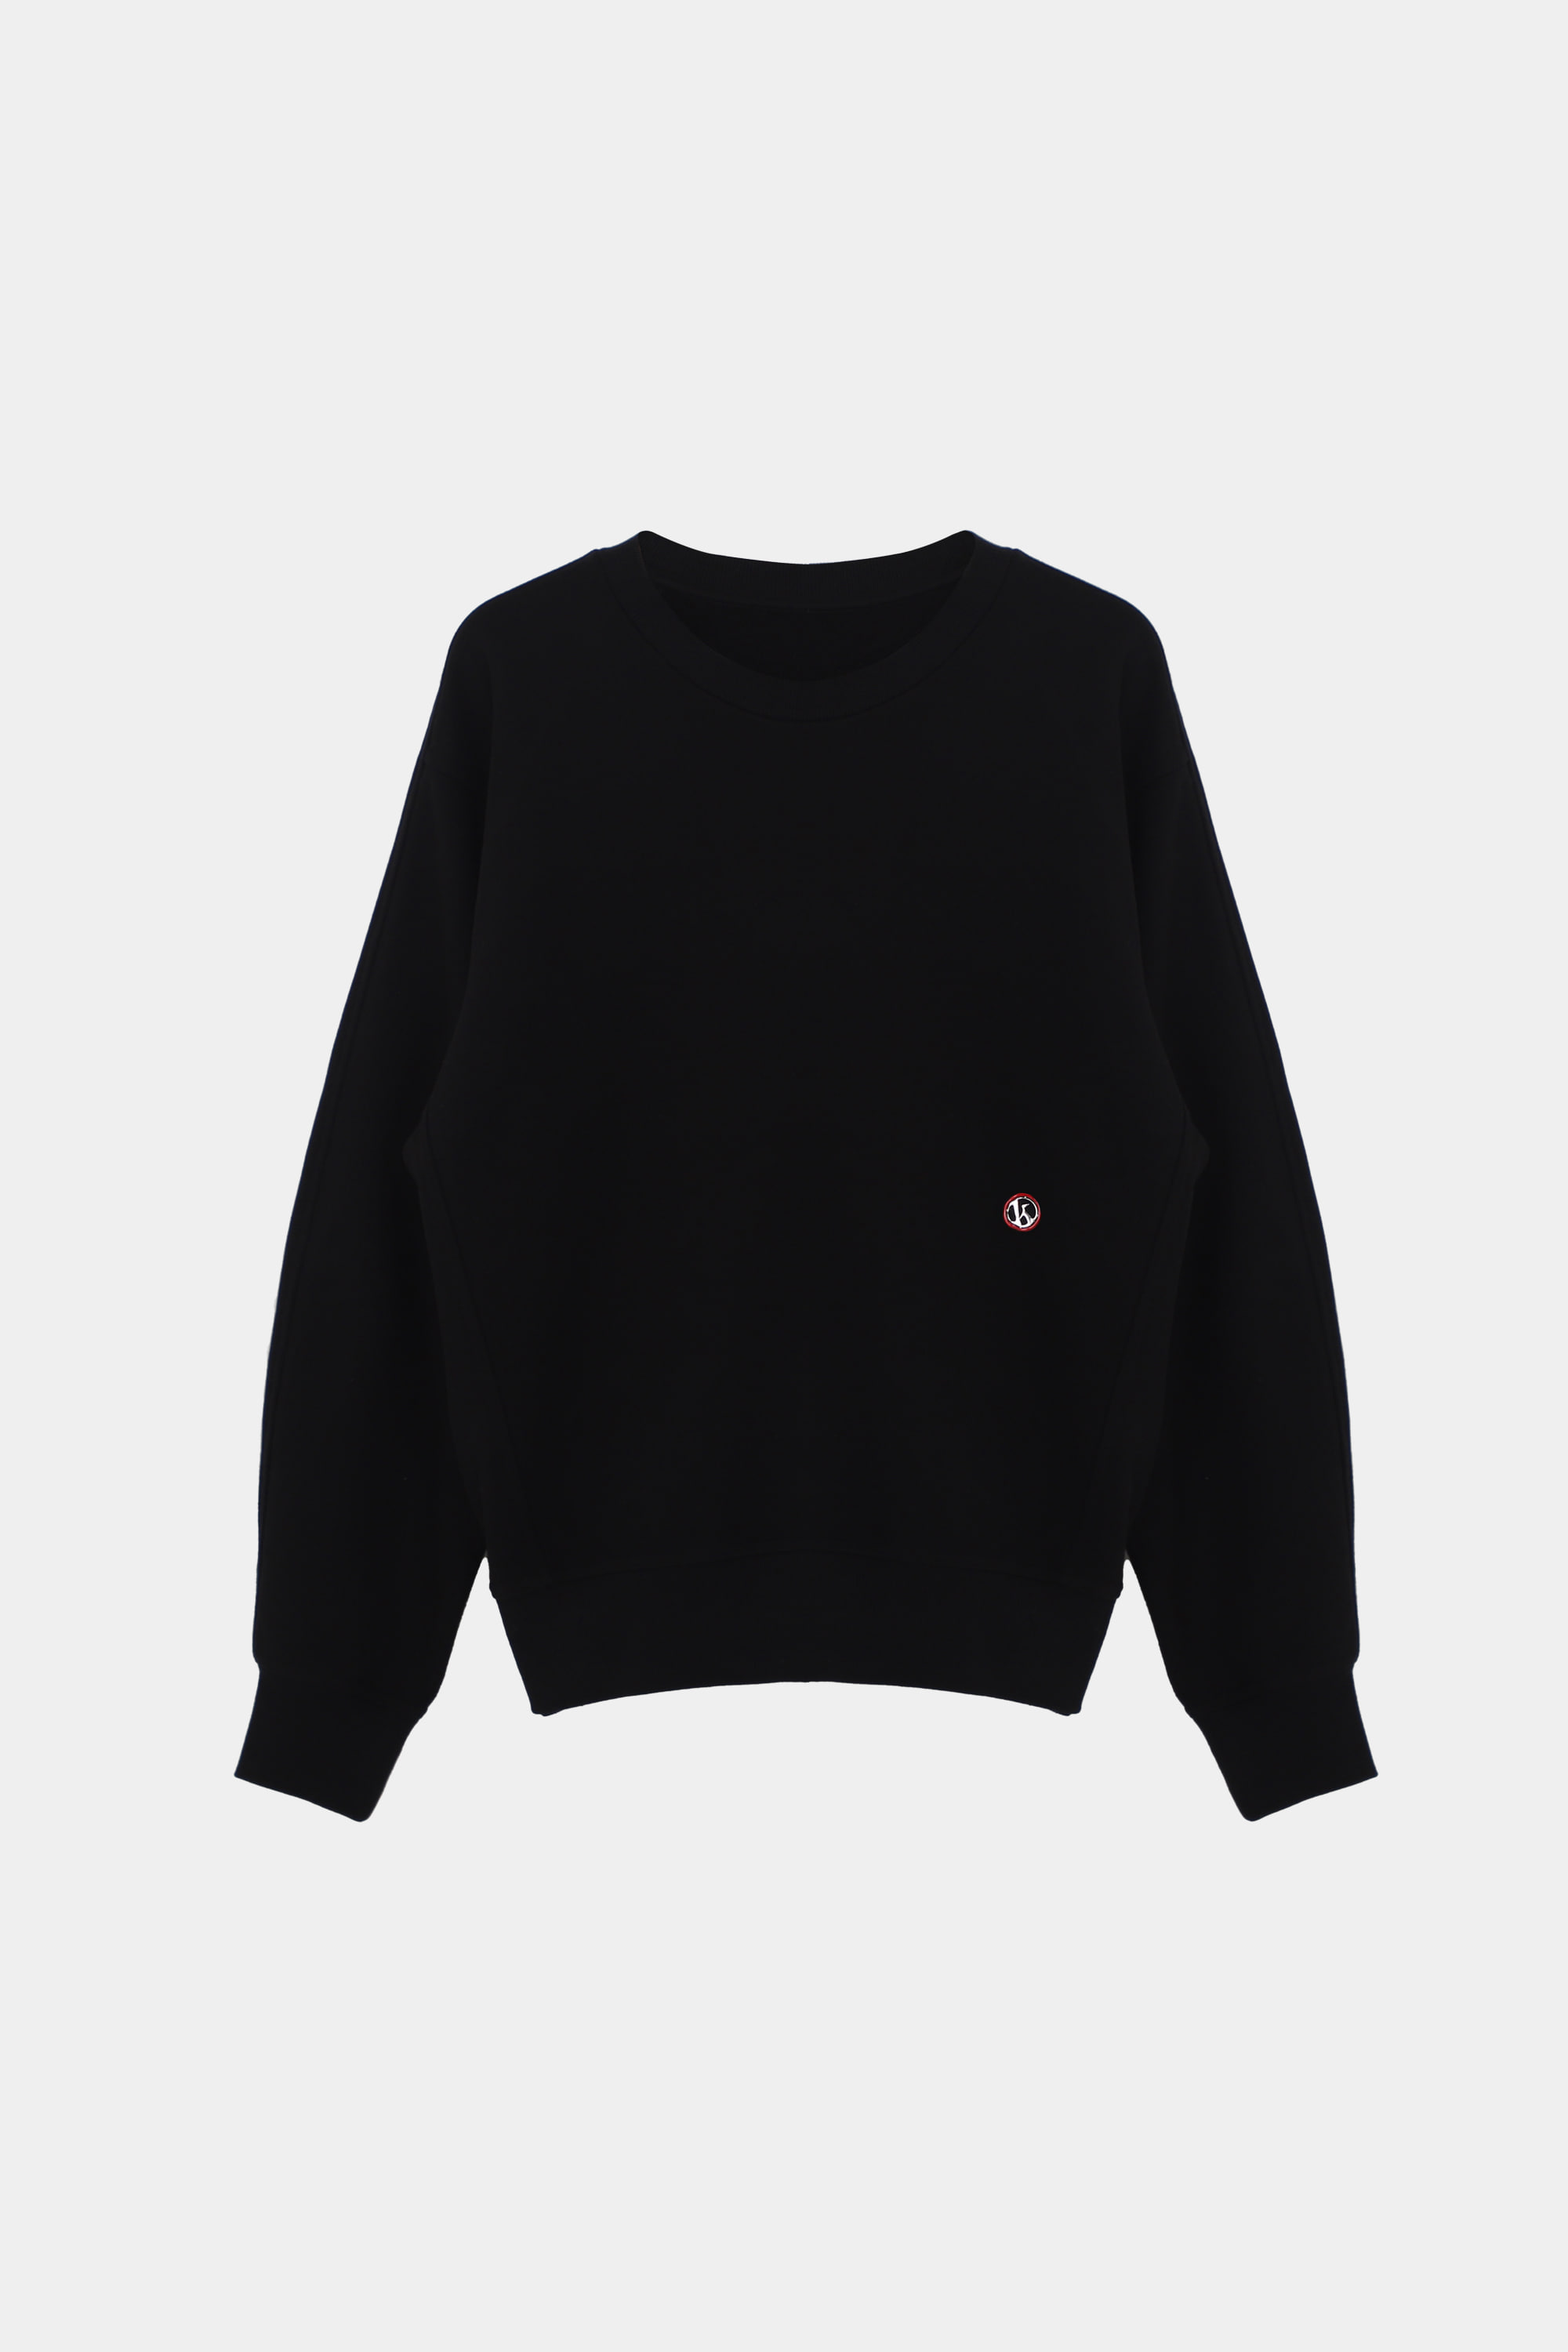 Emblem Brooch Sweatshirt_Deep Black